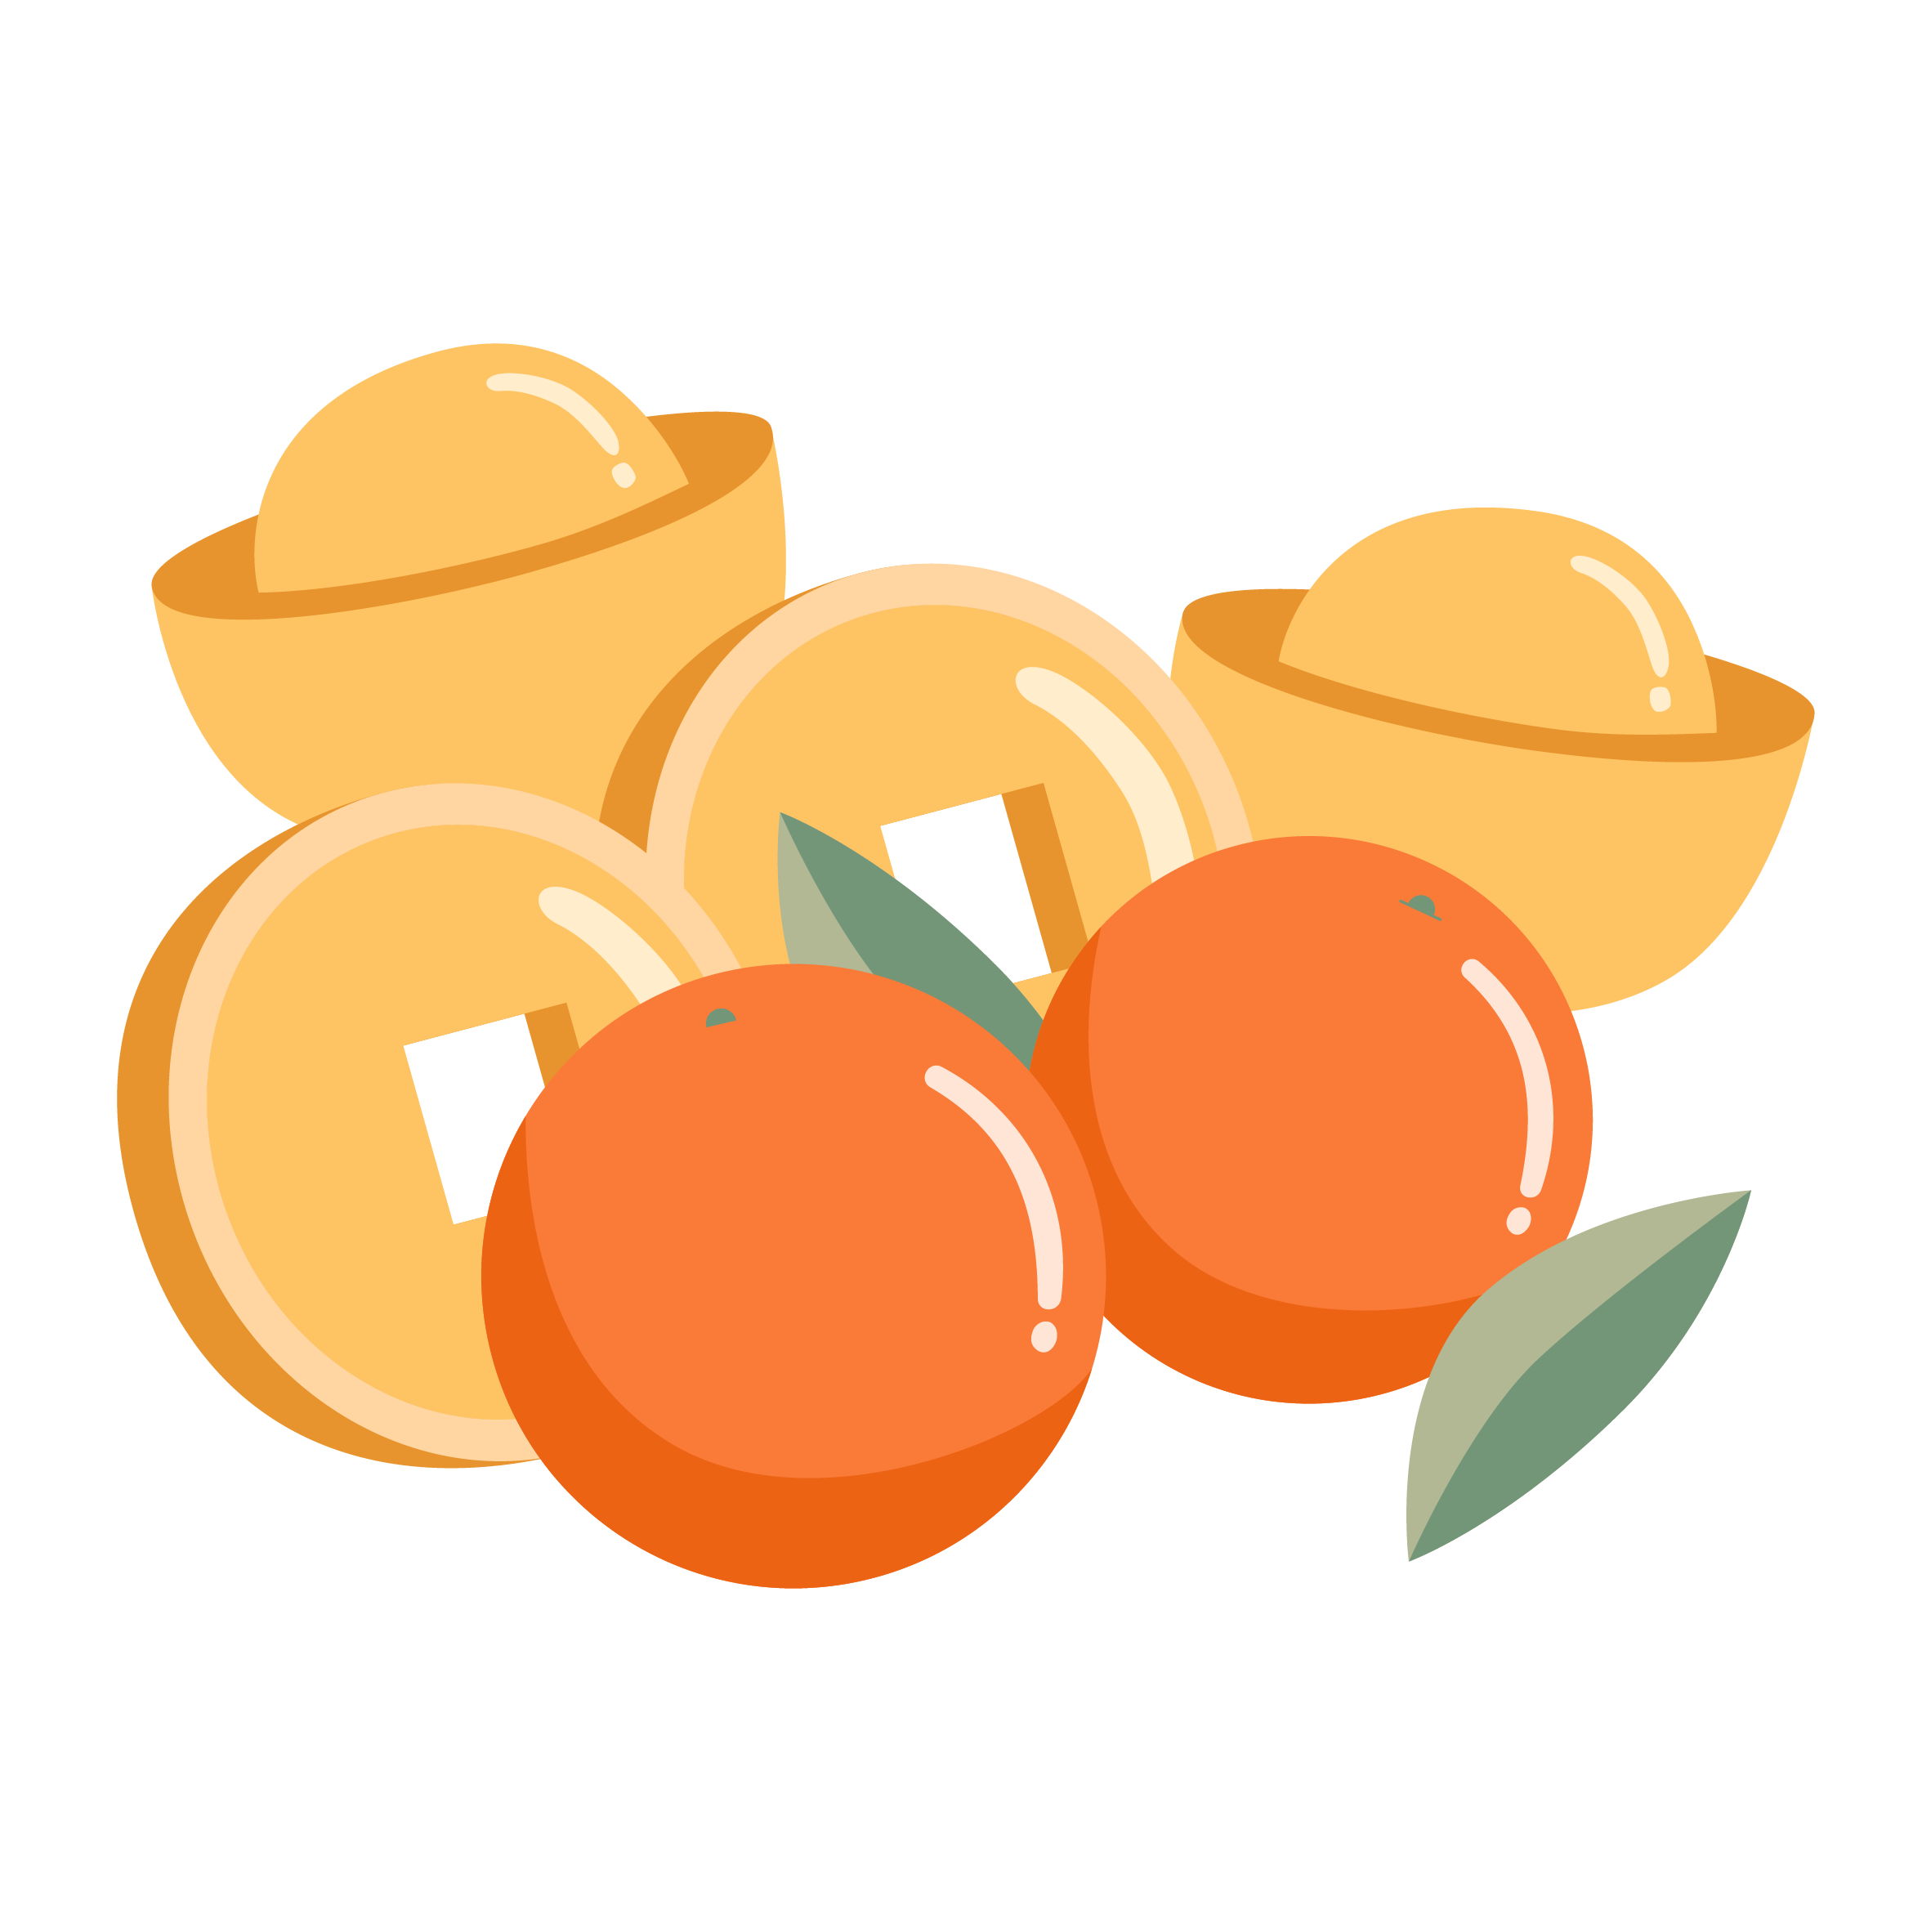 Illustration of mandarin oranges